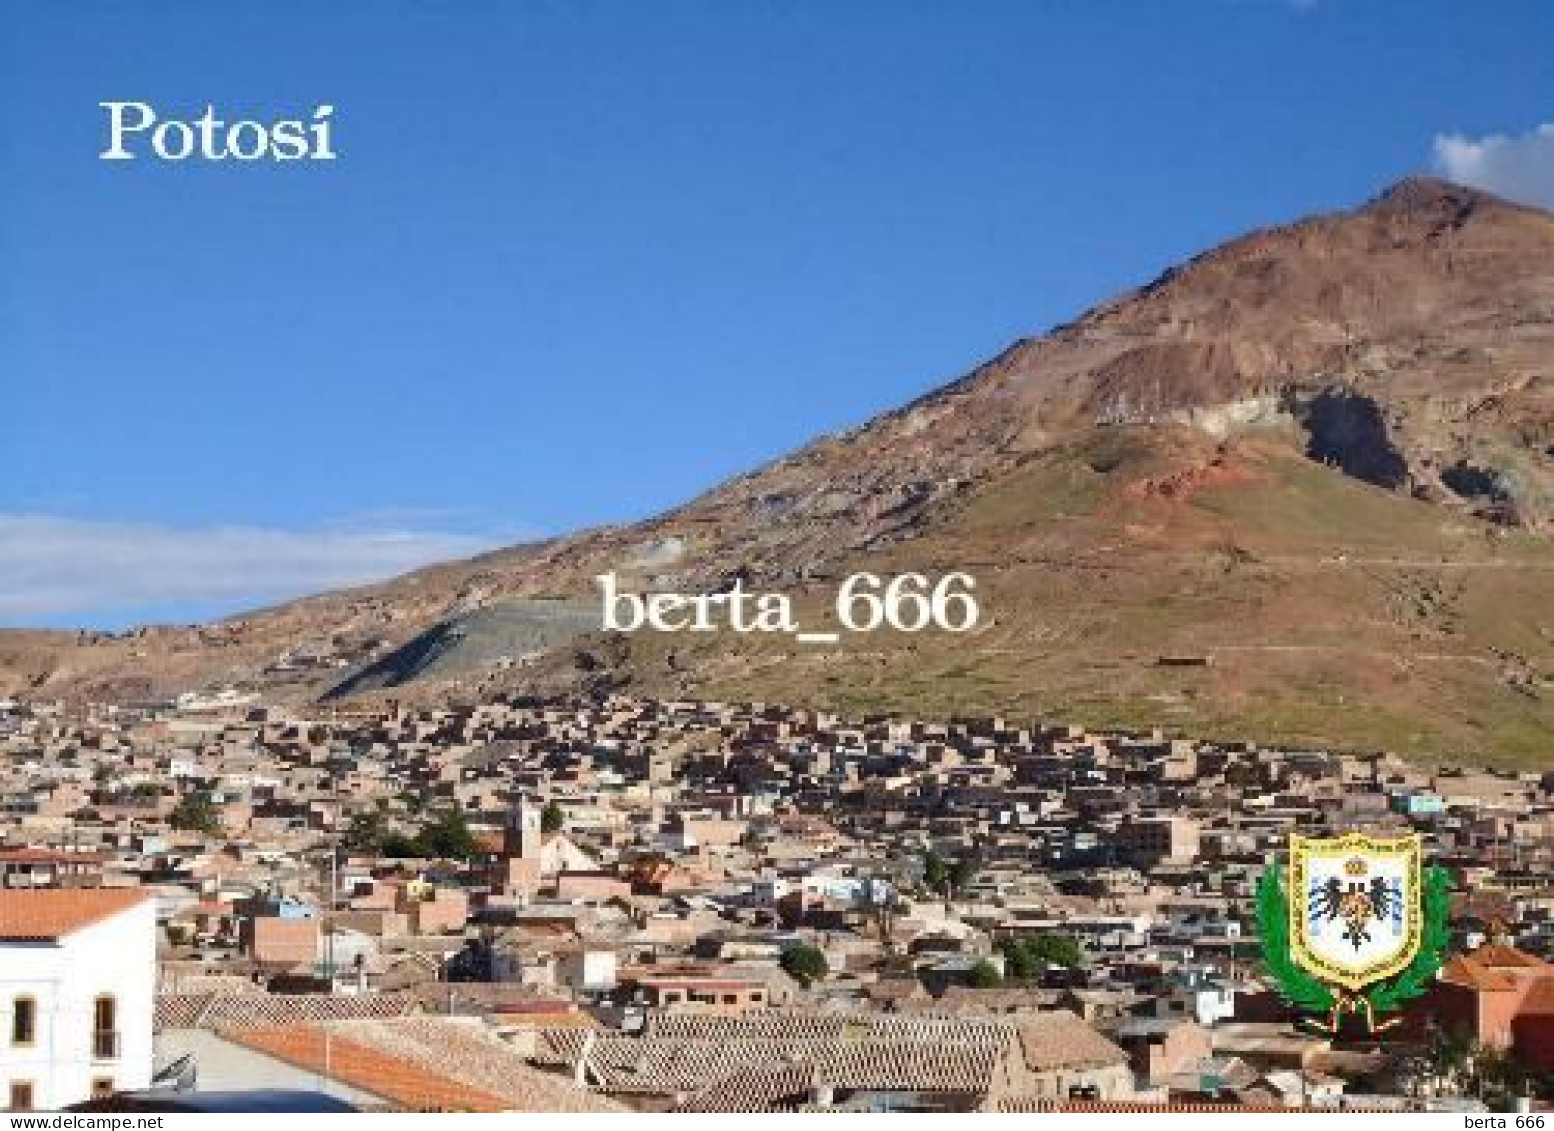 Bolivia Potosi Overview UNESCO New Postcard - Bolivia